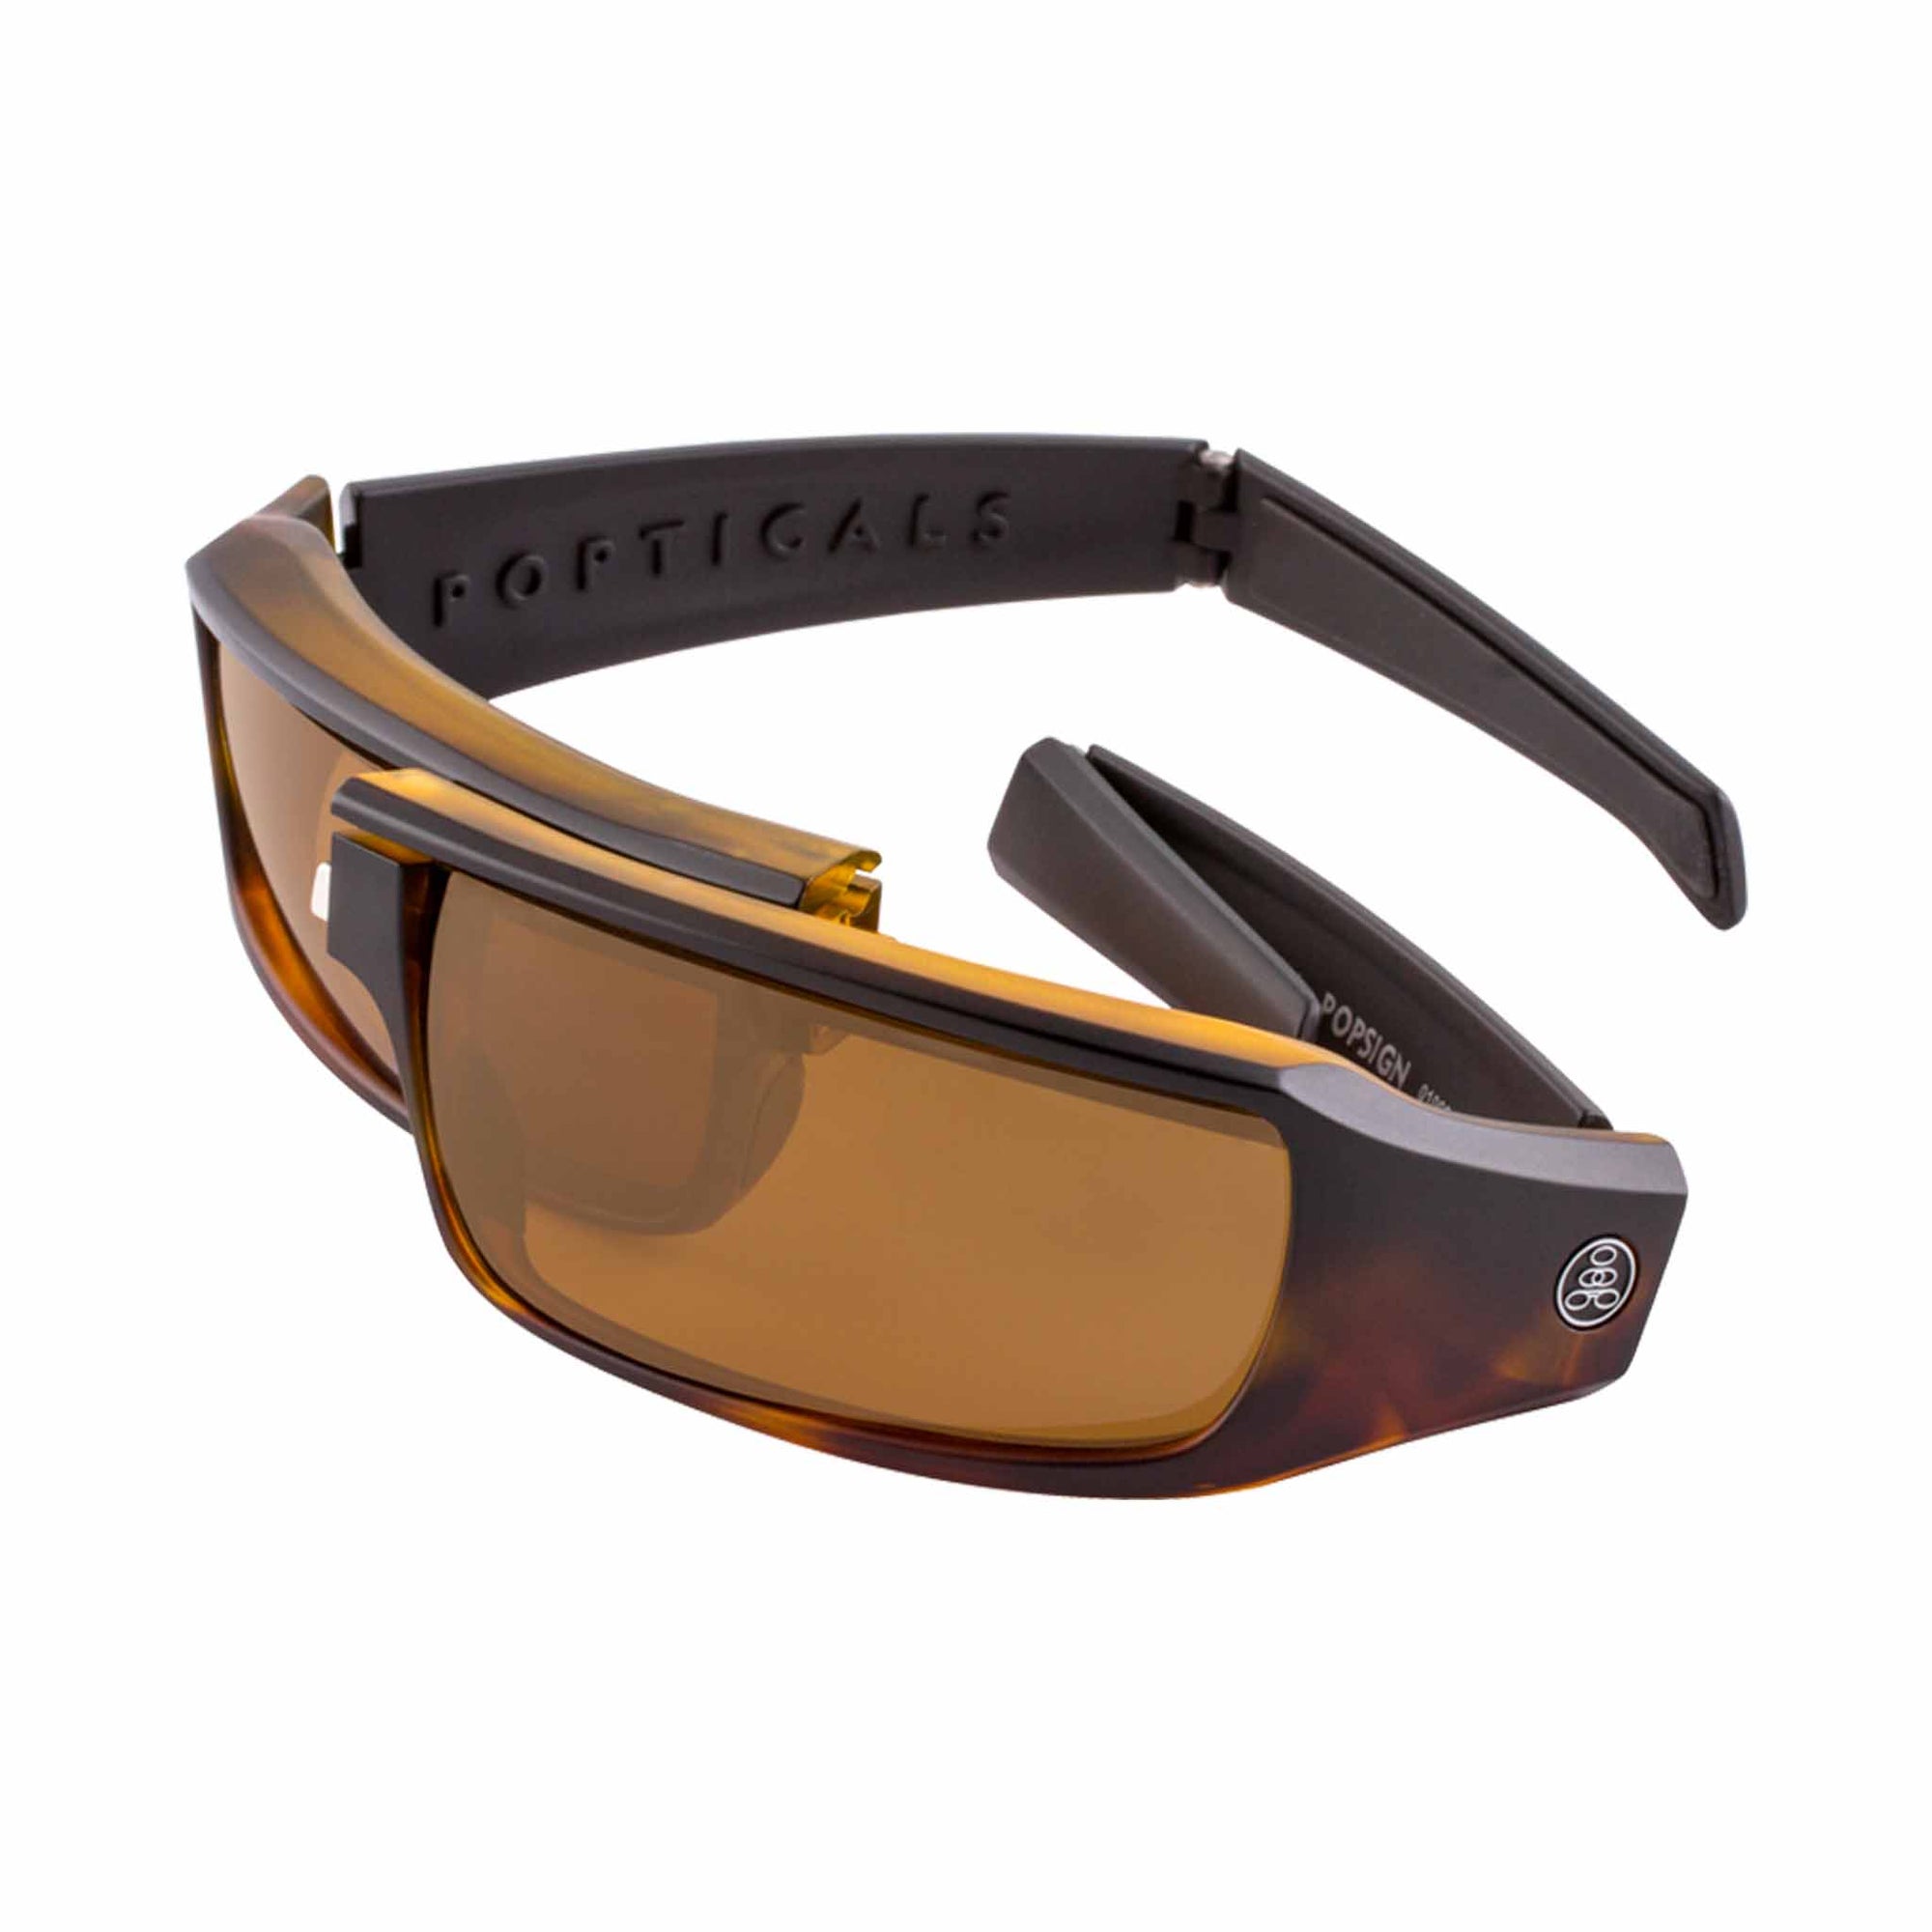 Popticals, Premium Compact Sunglasses, PopSign, 010020-AUNP, Polarized Sunglasses, Matte Black/Tortoise Frame, Brown Lenses, Spider View